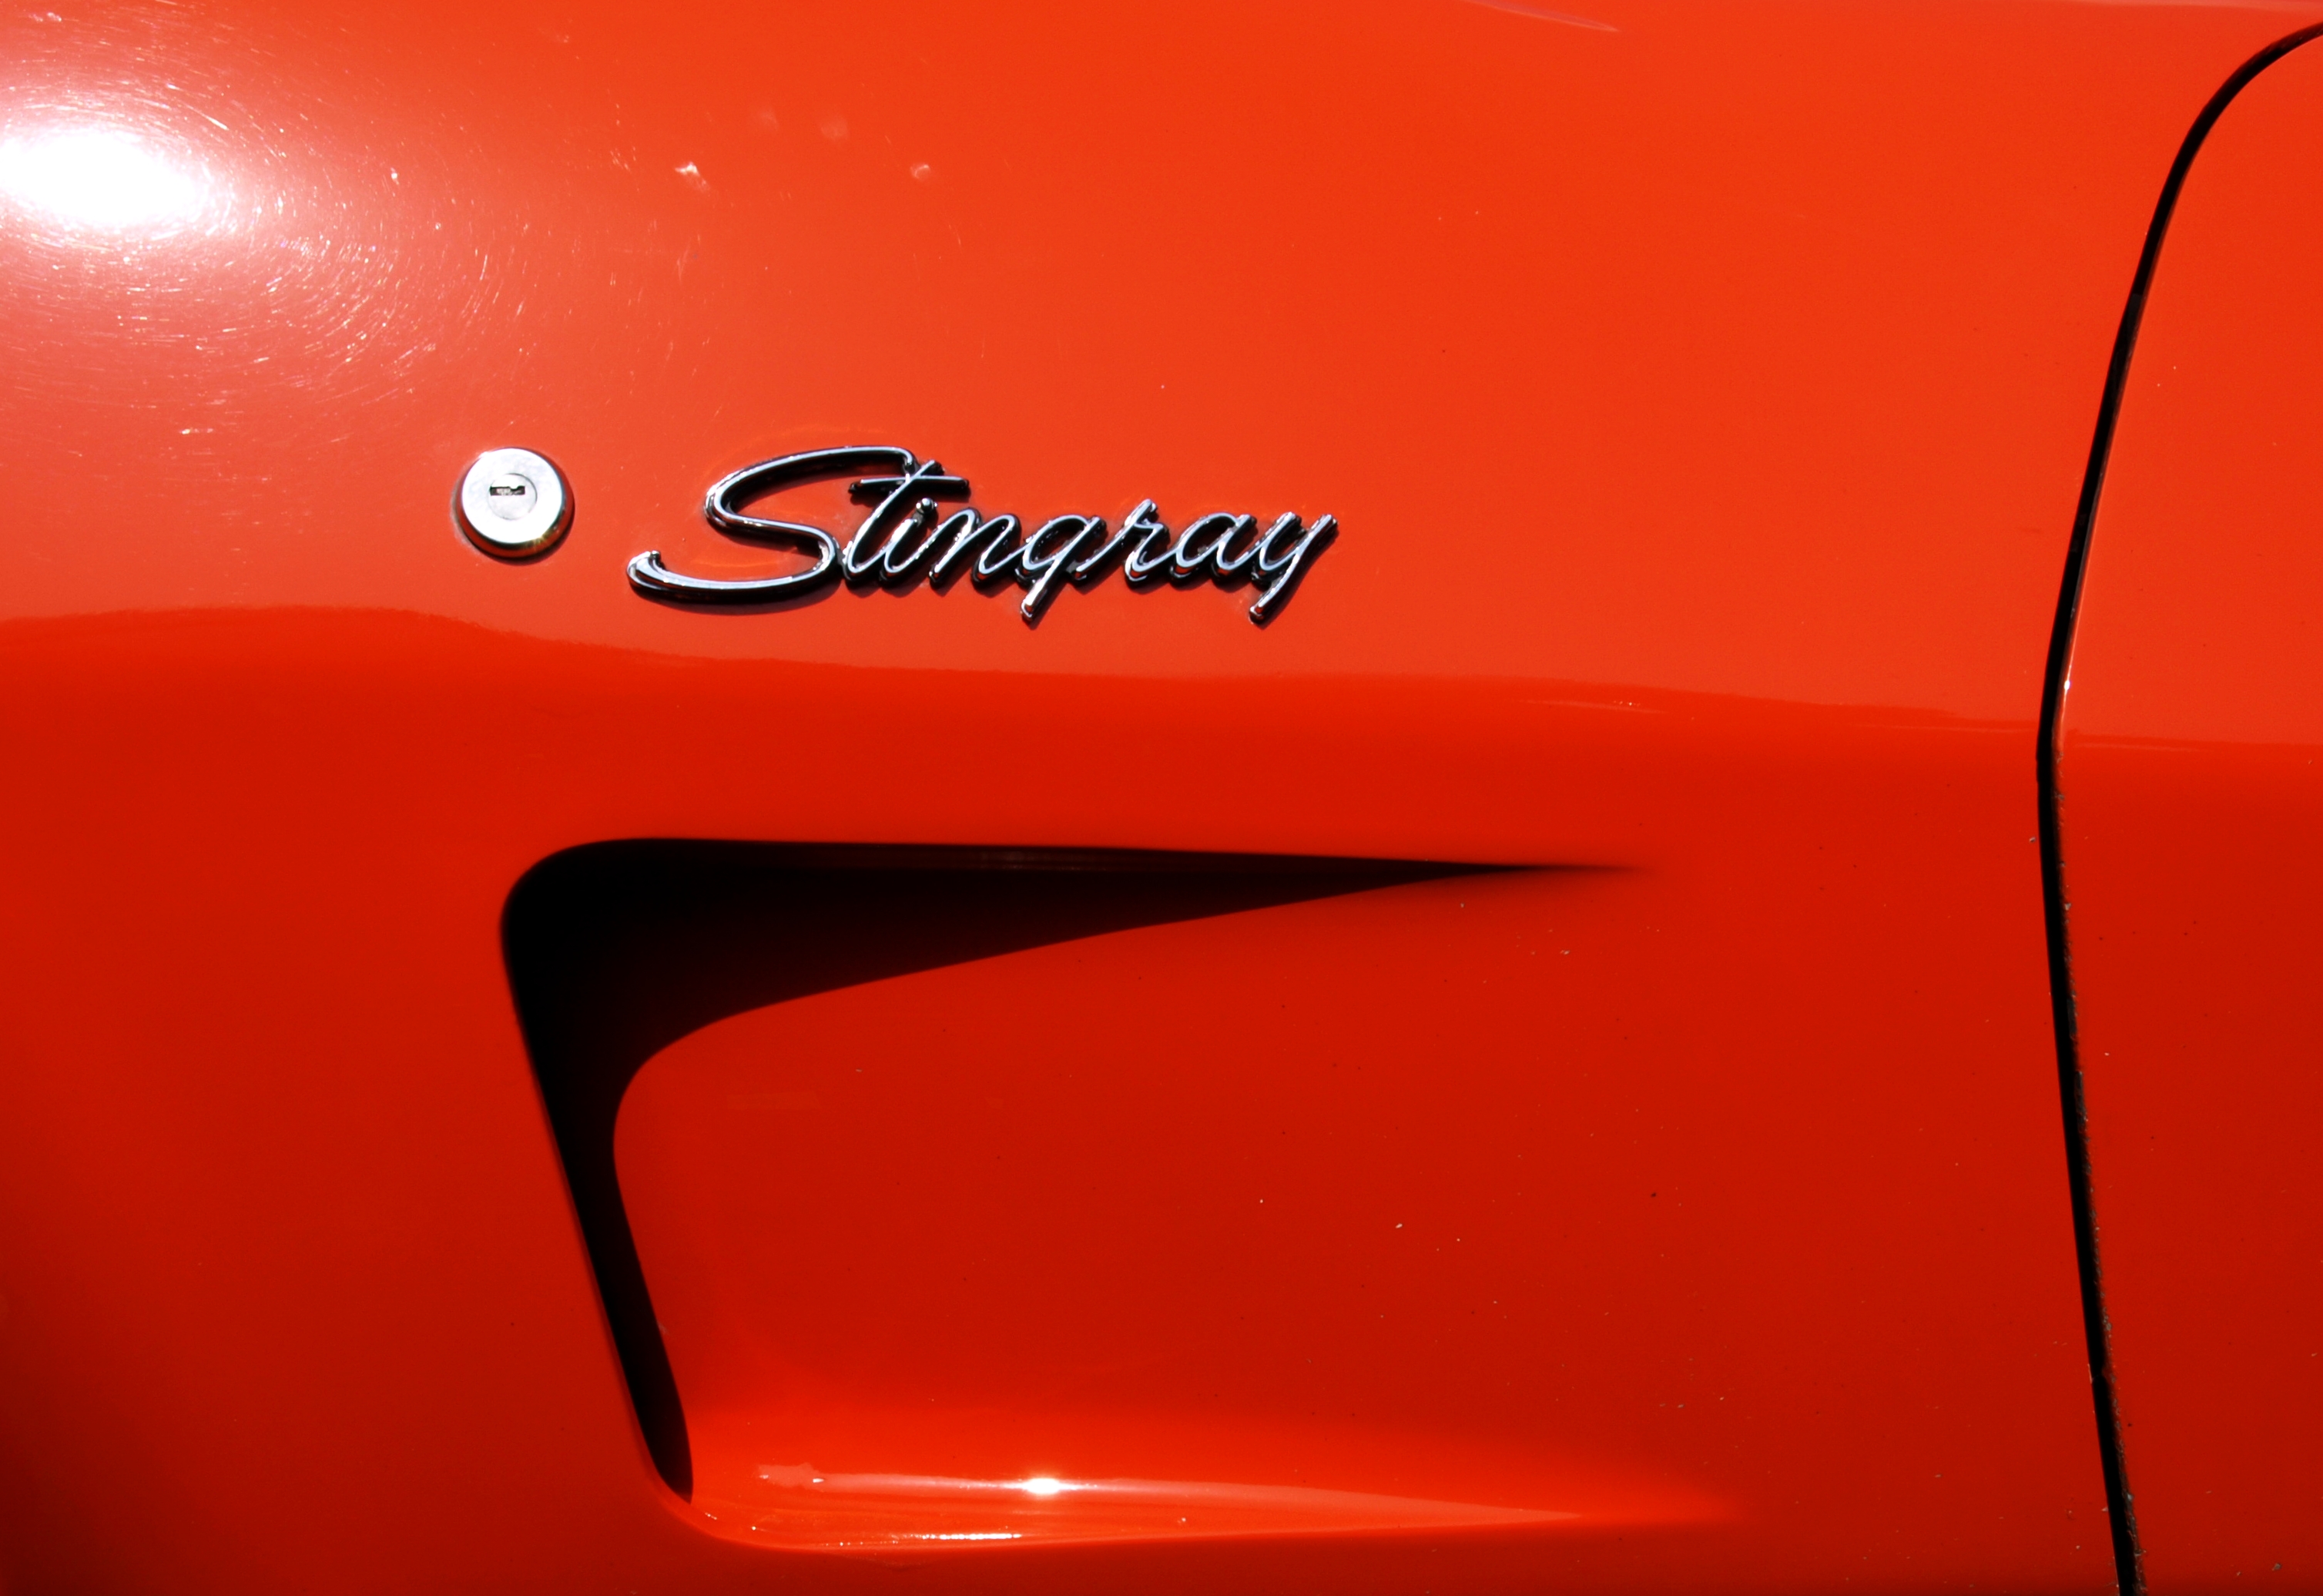 This Corvette Stingray looks